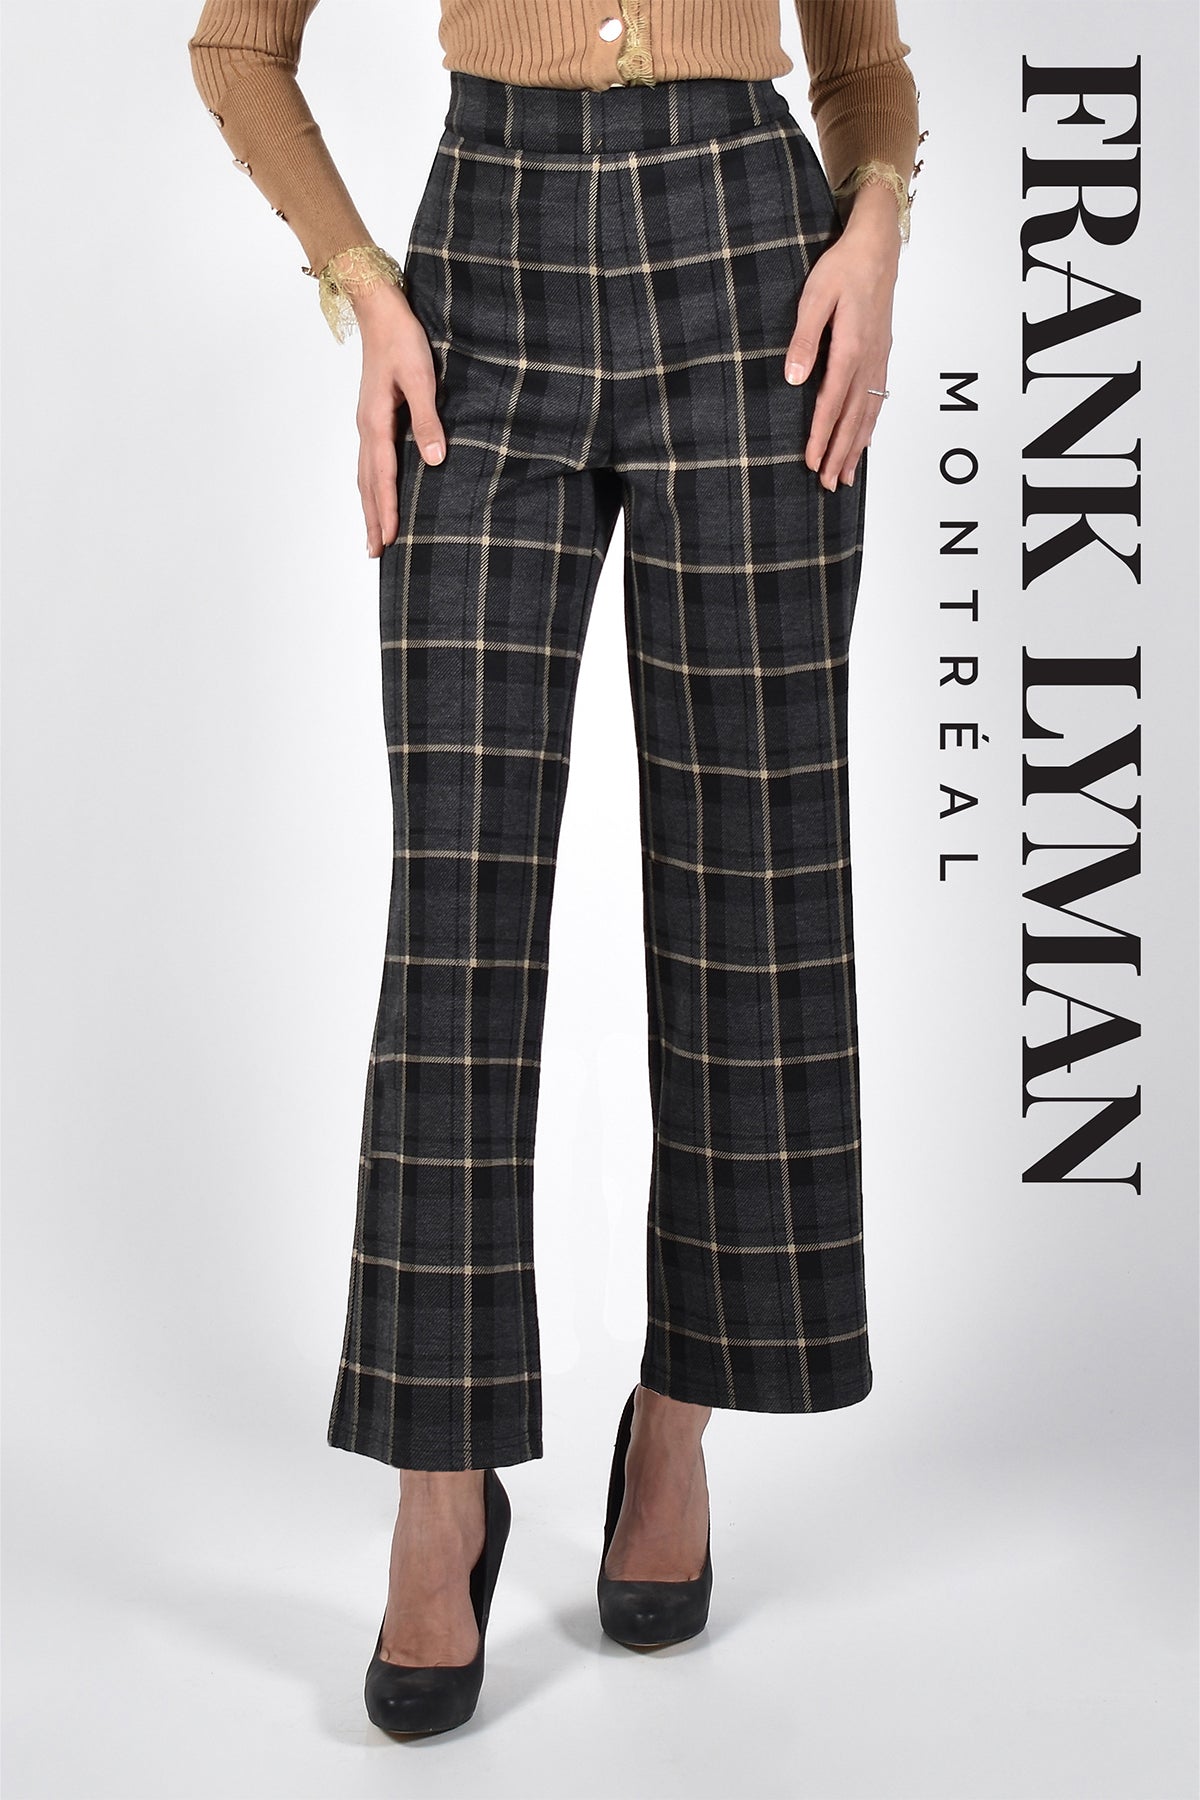 Frank Lyman Montreal Pants-Buy Frank Lyman Montreal Pants Online-Frank Lyman Montreal Sweaters-Frank Lyman Montreal Jeans-Frank Lyman Montreal Online Shop